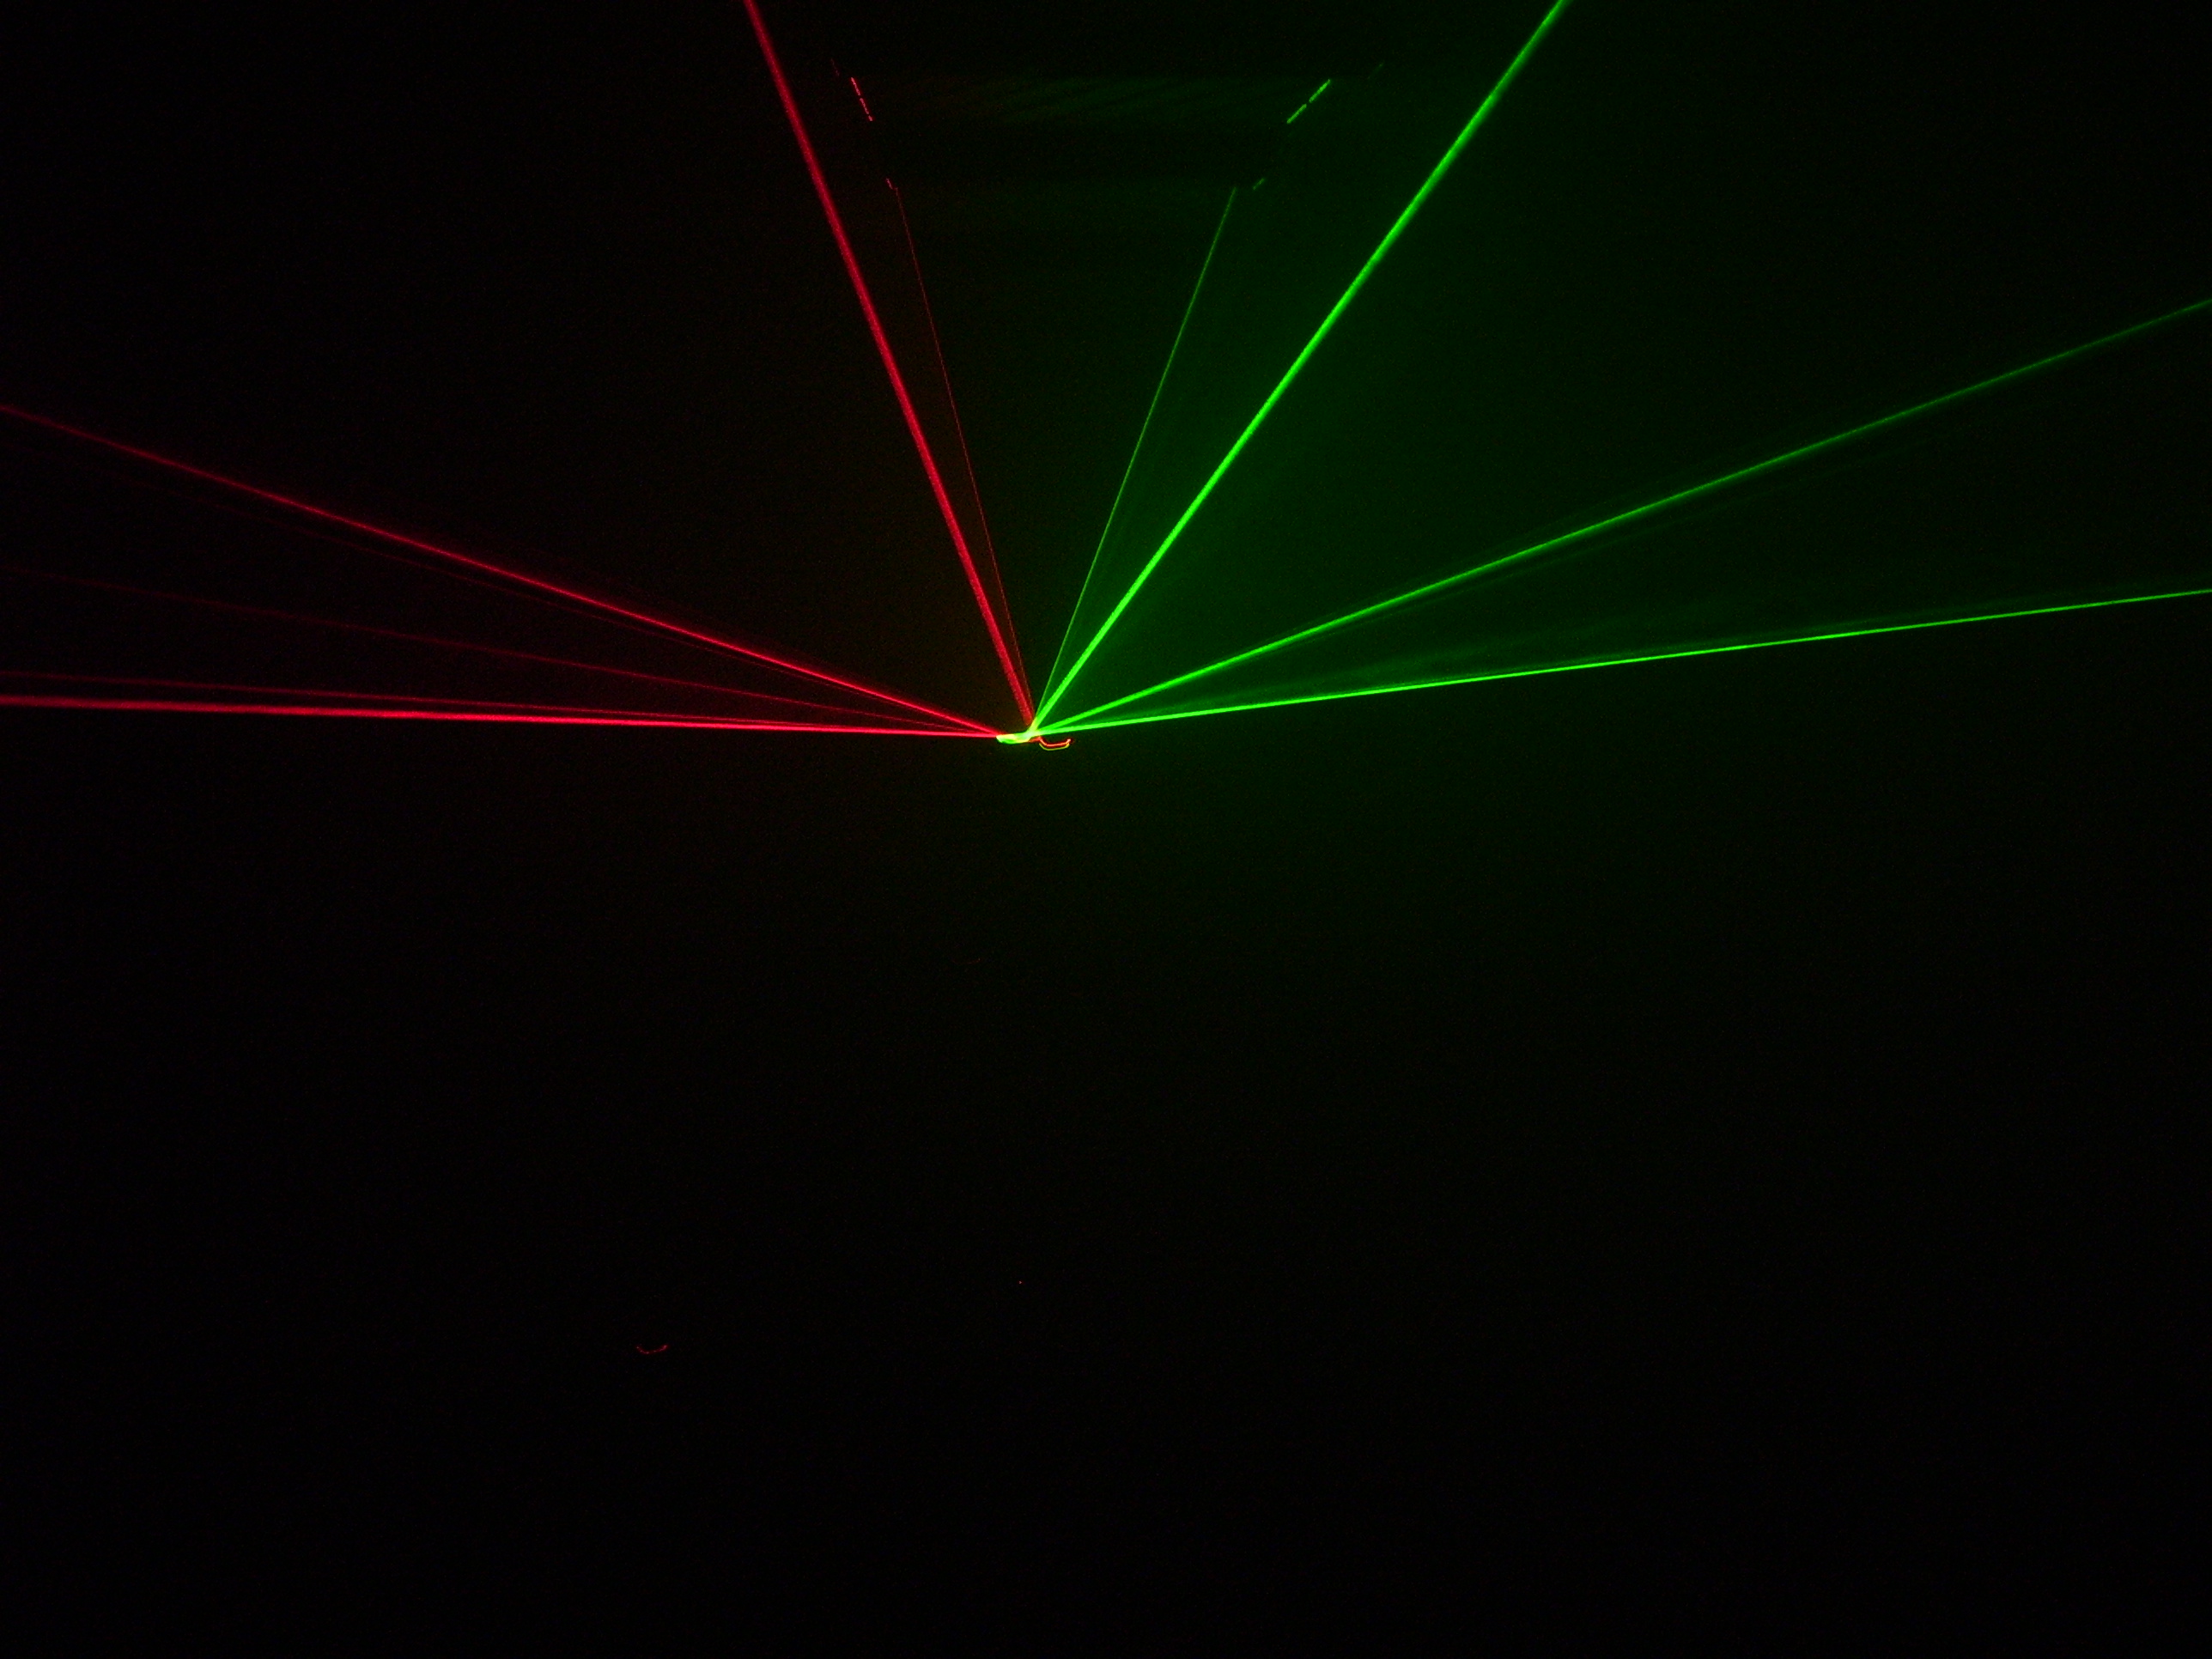 Lasershow